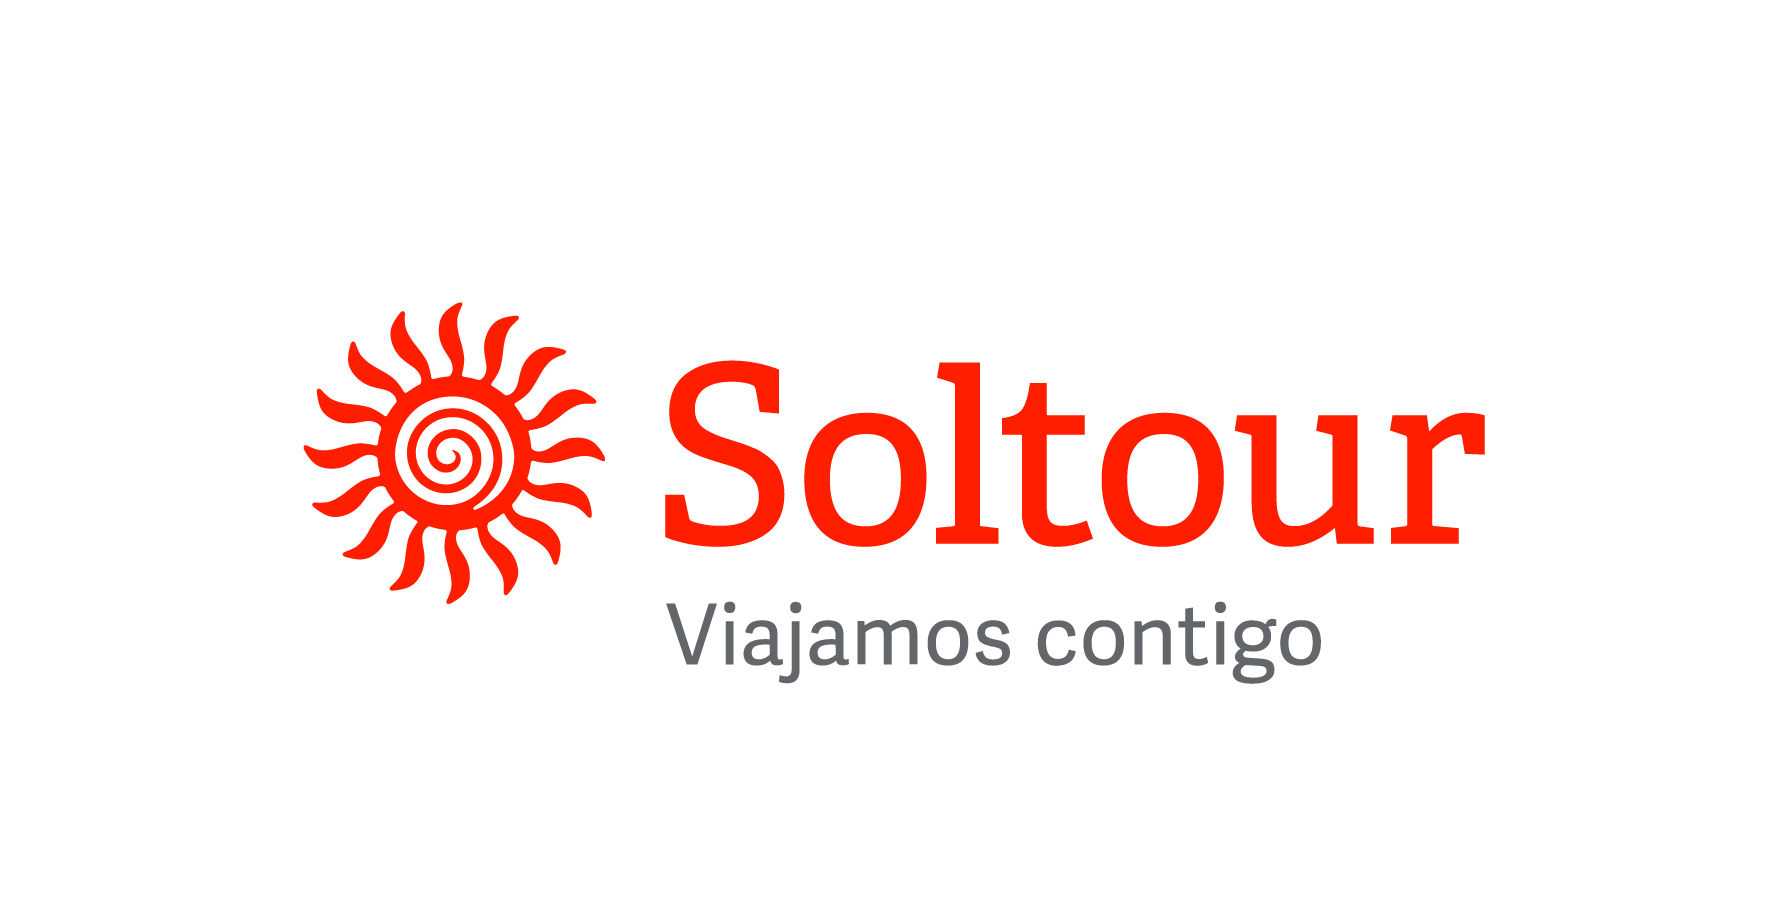 Soltour lanzará este verano un vuelo directo a la región dominicana de Samaná desde España